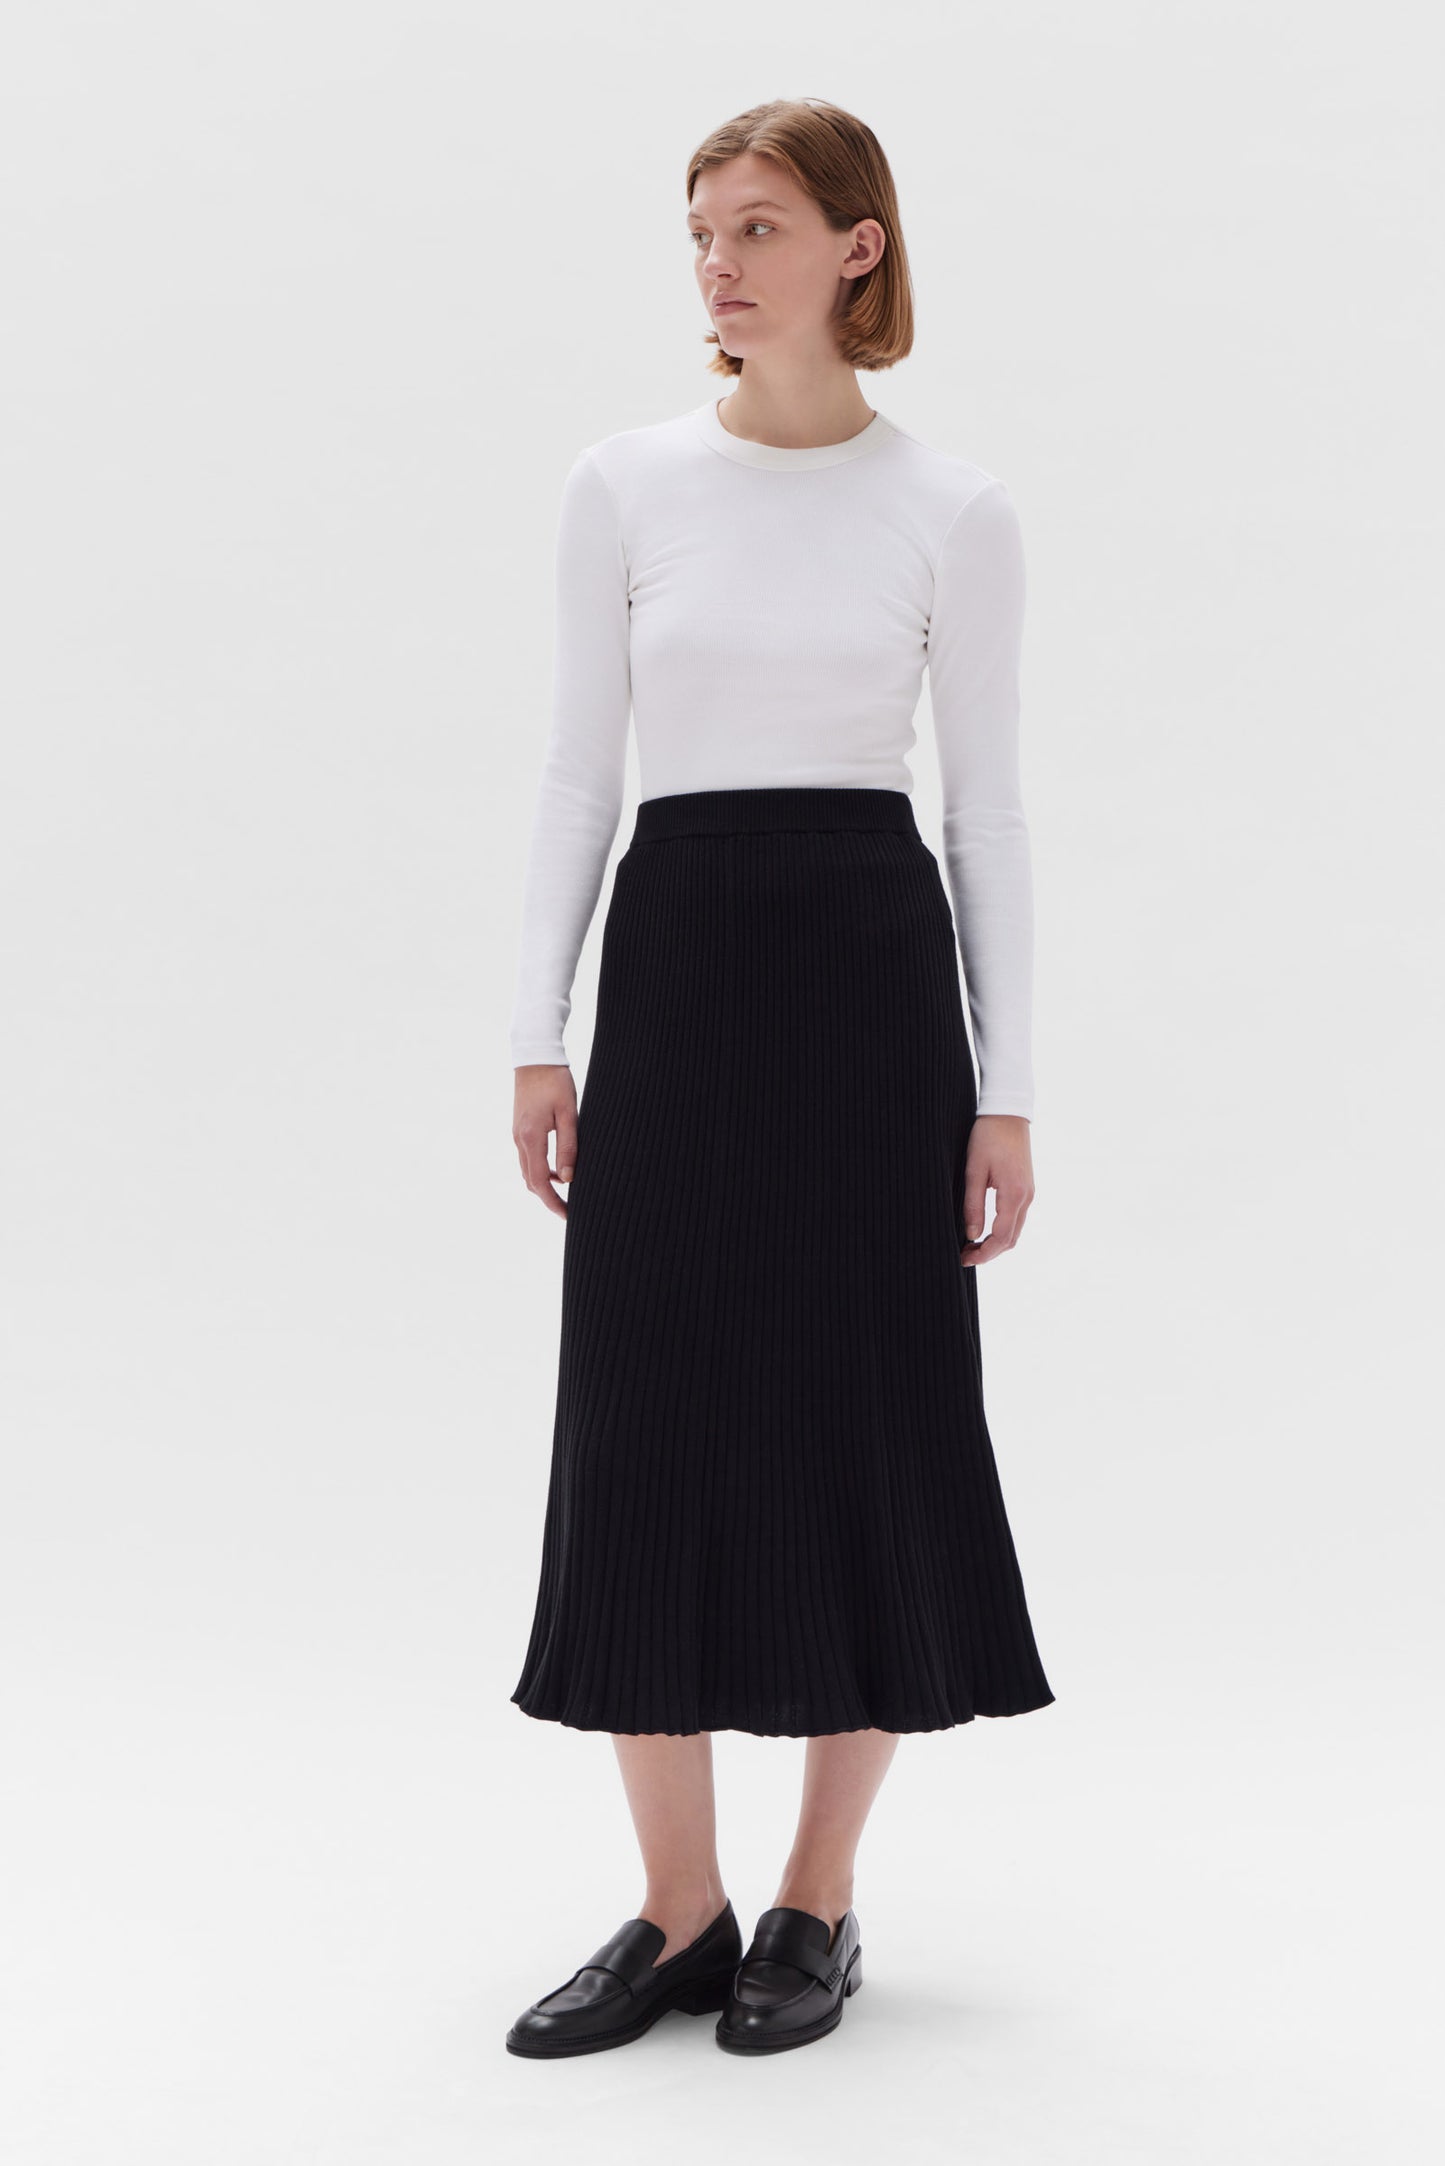 ASSEMBLY LABEL // Freya Knit Skirt BLACK